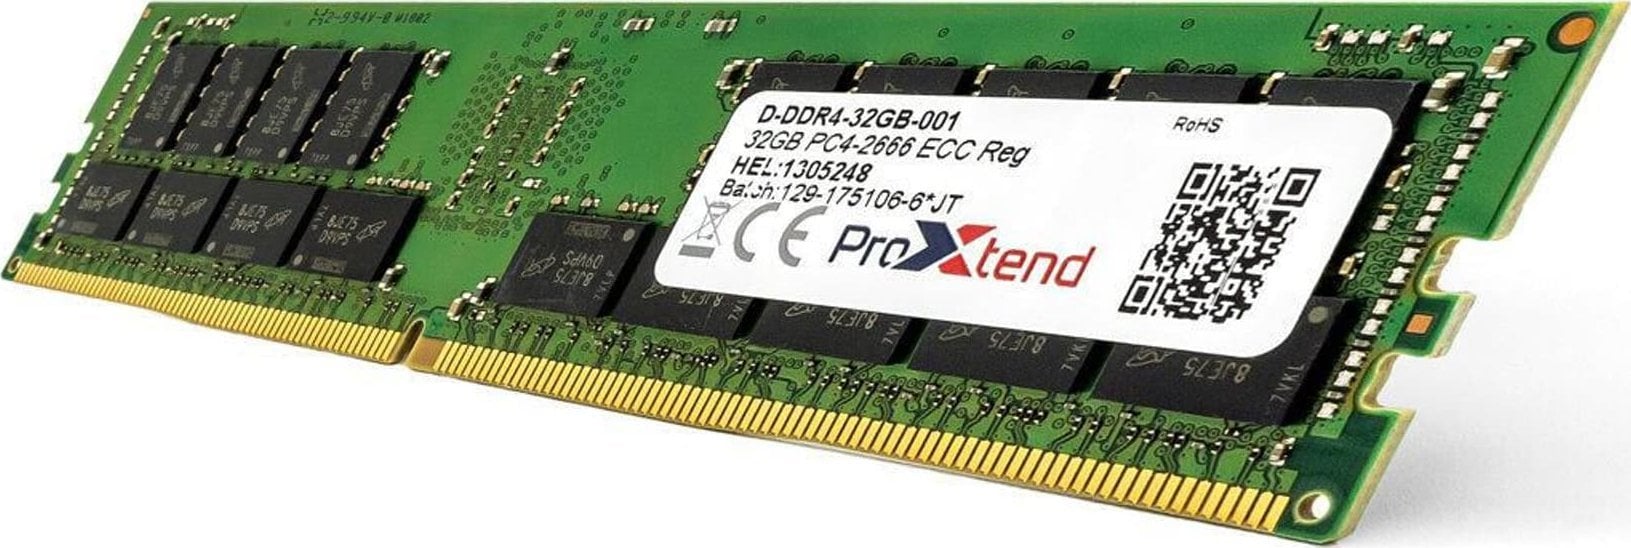 Memorii server - ProXtend  